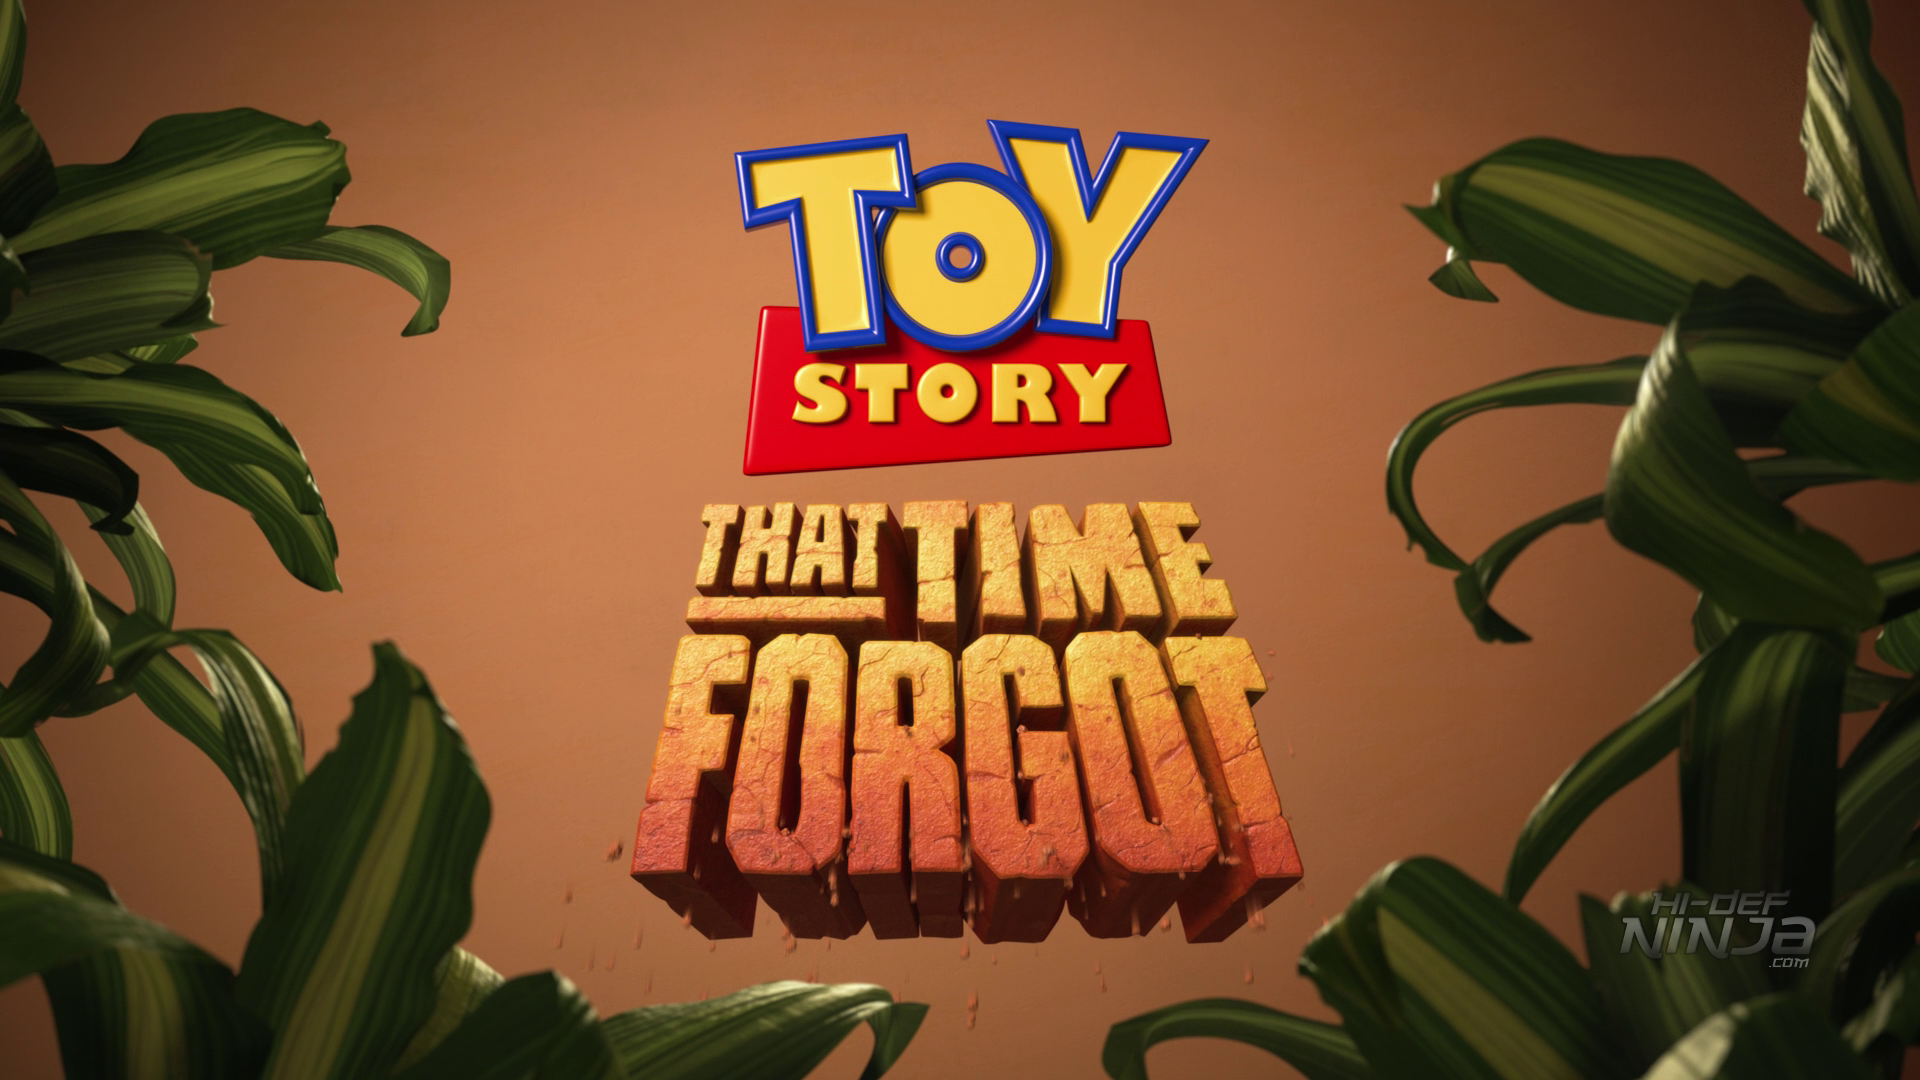 Toy-Story-Time-Forgot-HiDefNinja (1)